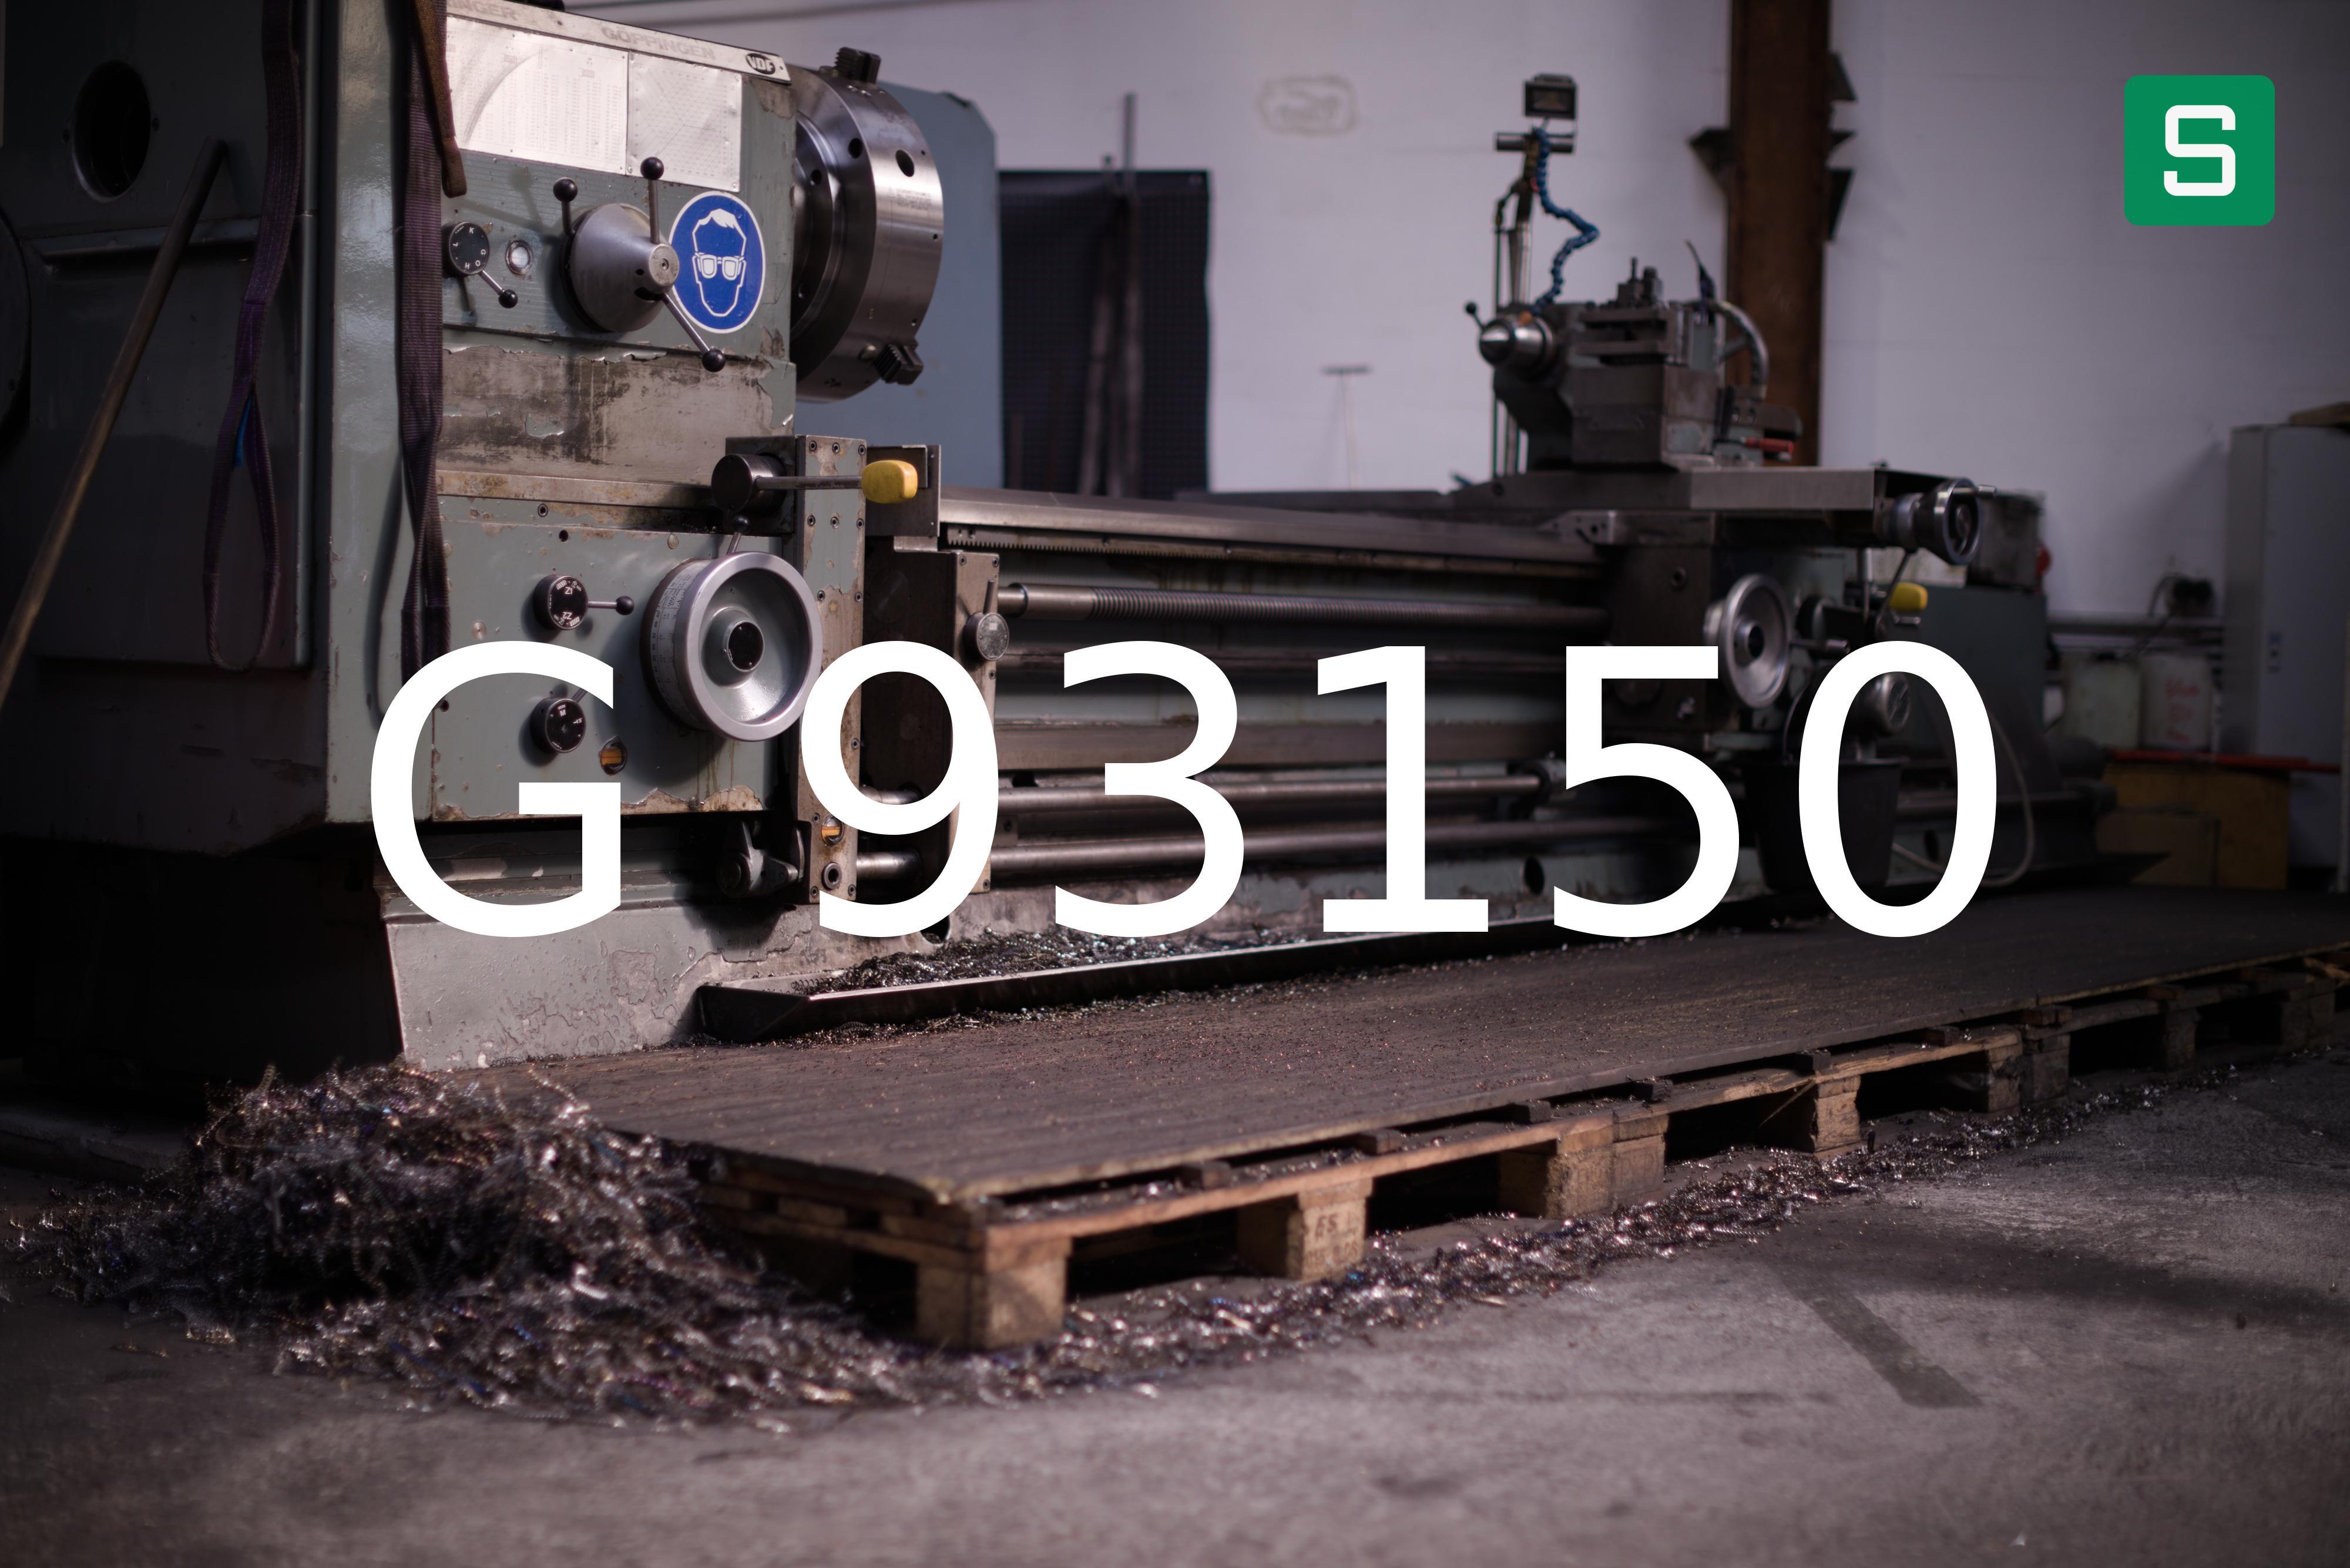 Steel Material: G 93150